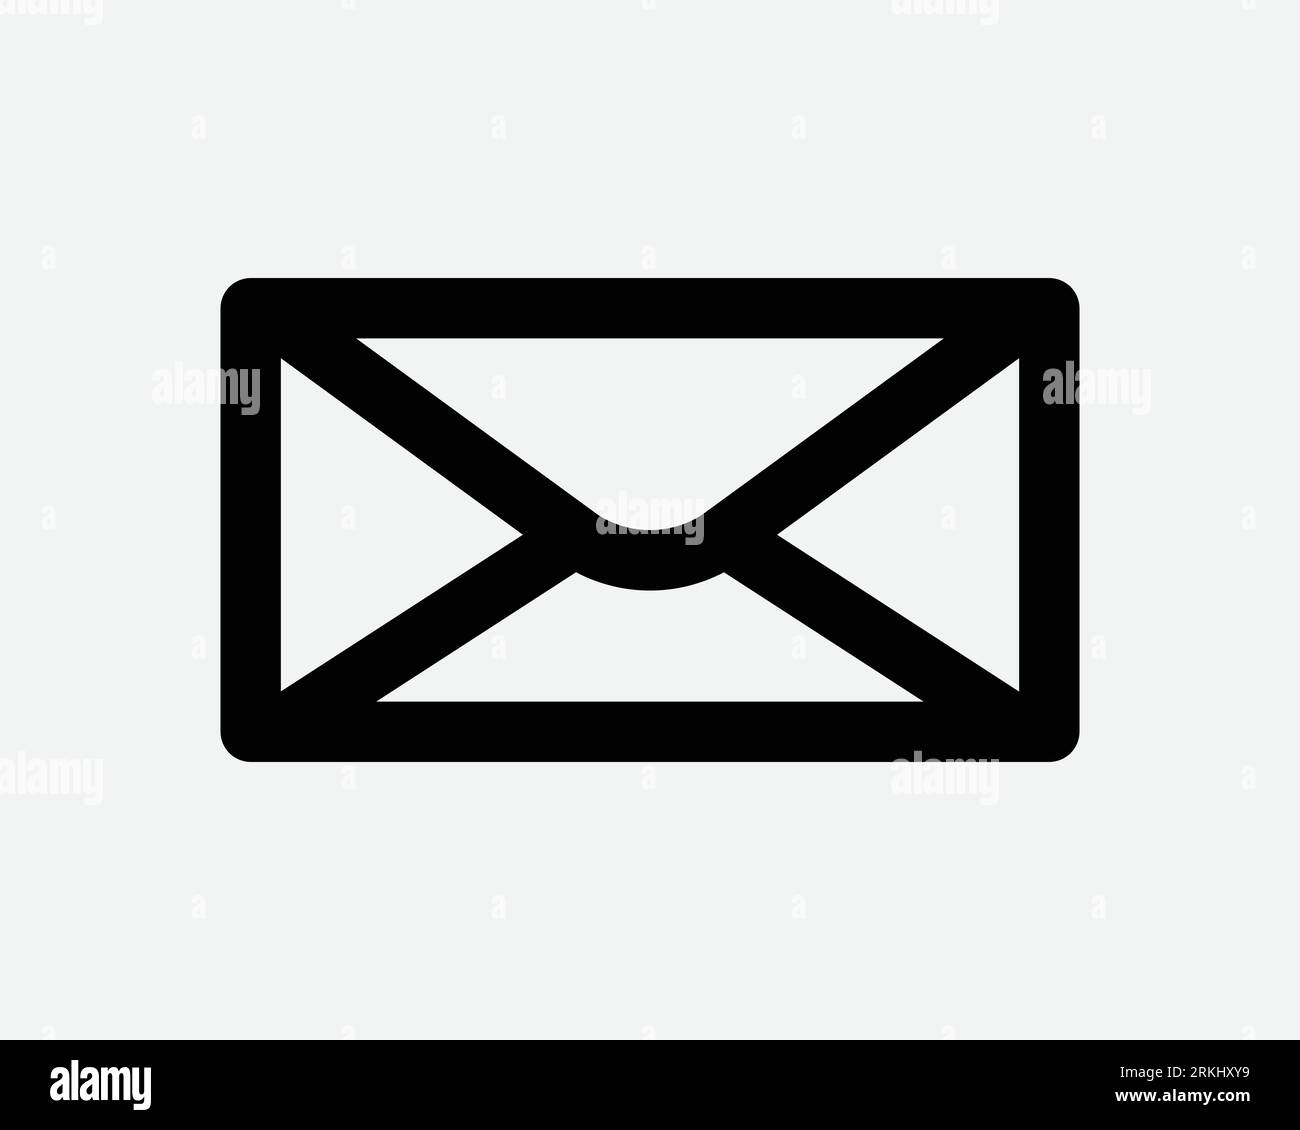 Mail Icon Letter Envelope Mailing Message Communication Email Postal Send Post Black White Shape Vector Clipart Graphic Illustration Artwork Sign Symb Stock Vector